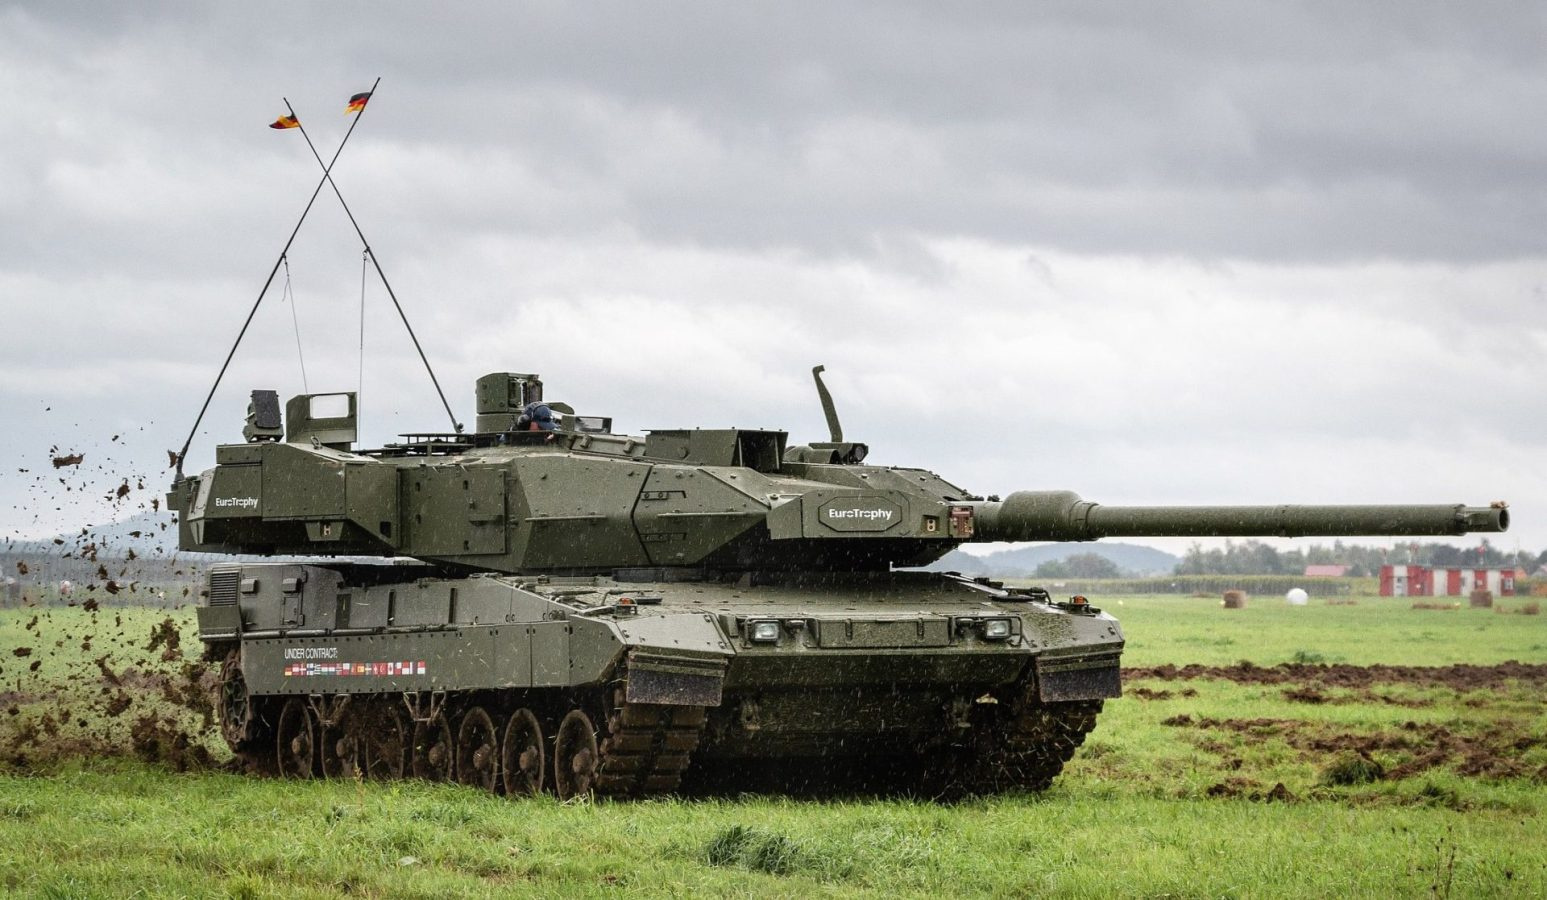 Leopard 2A8 main battle tank